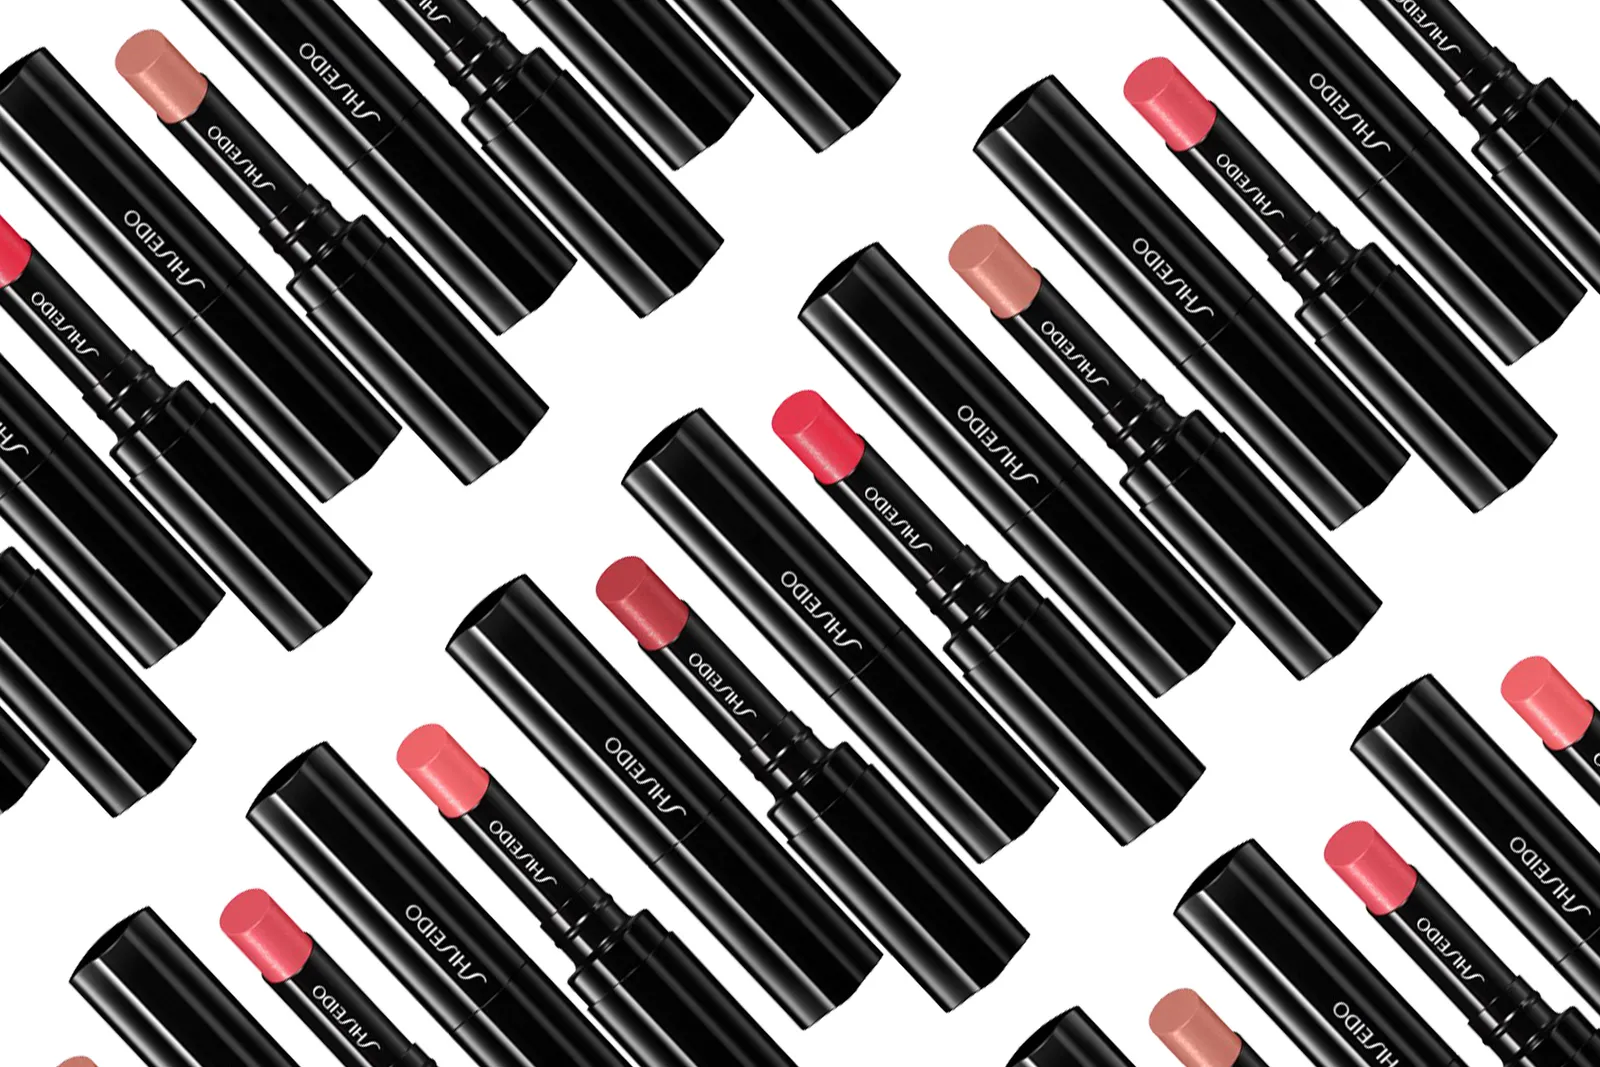 Seru Banget! Shiseido Promosikan Koleksi Lipstick Terbaru Mereka Lewat Ciuman Virtual